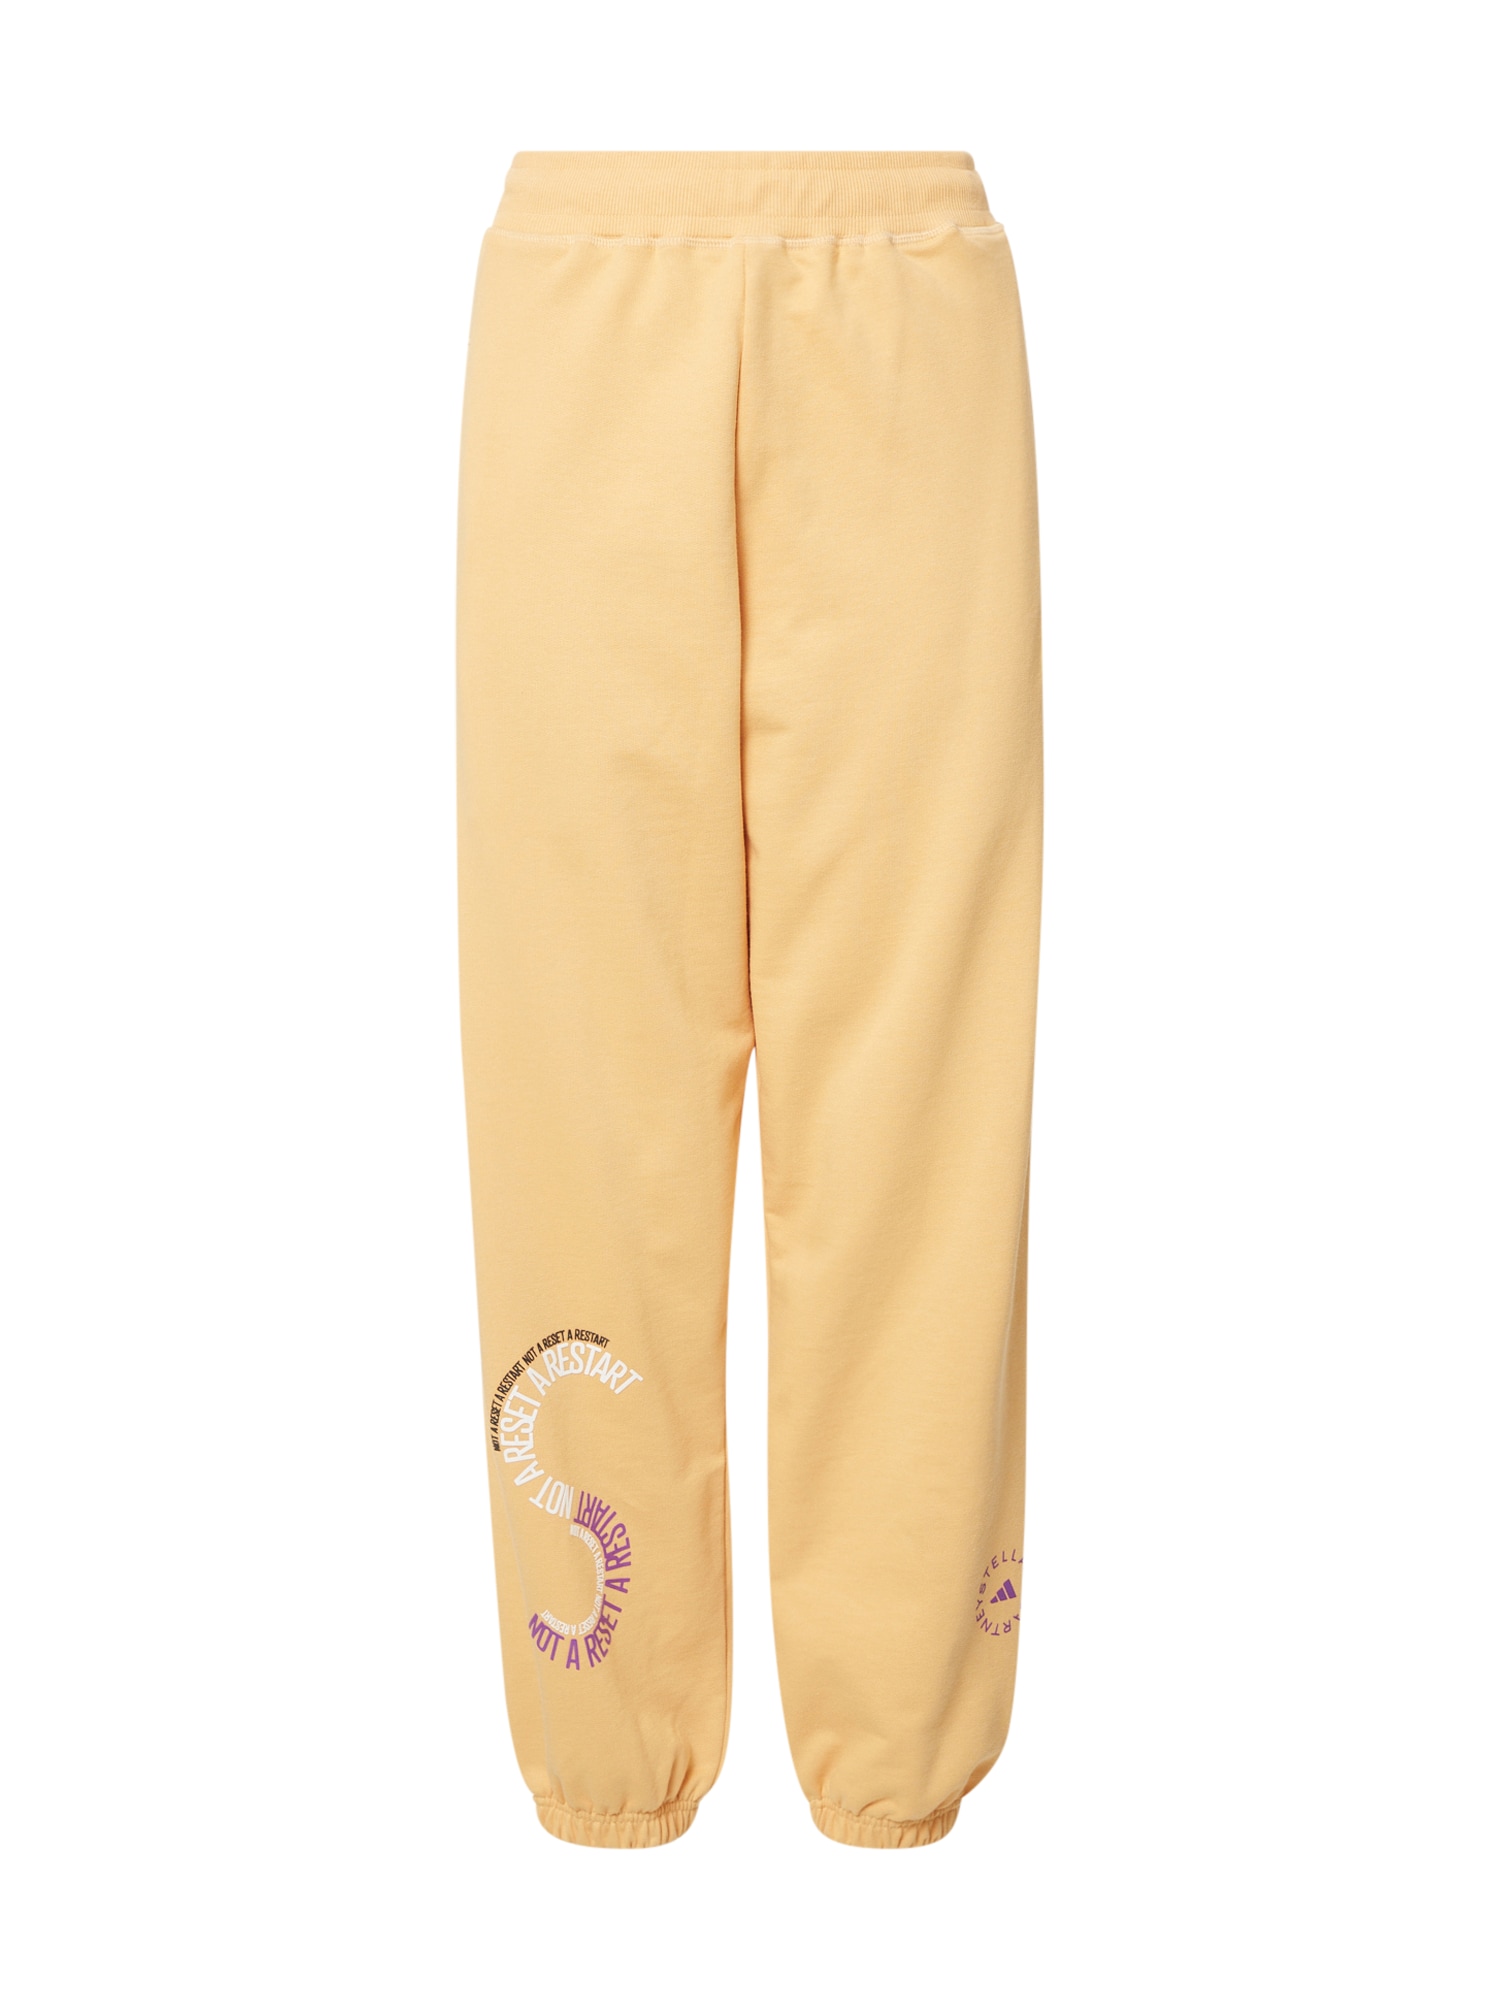 ADIDAS BY STELLA MCCARTNEY Športne hlače  pastelno rumena / temno liila / bela